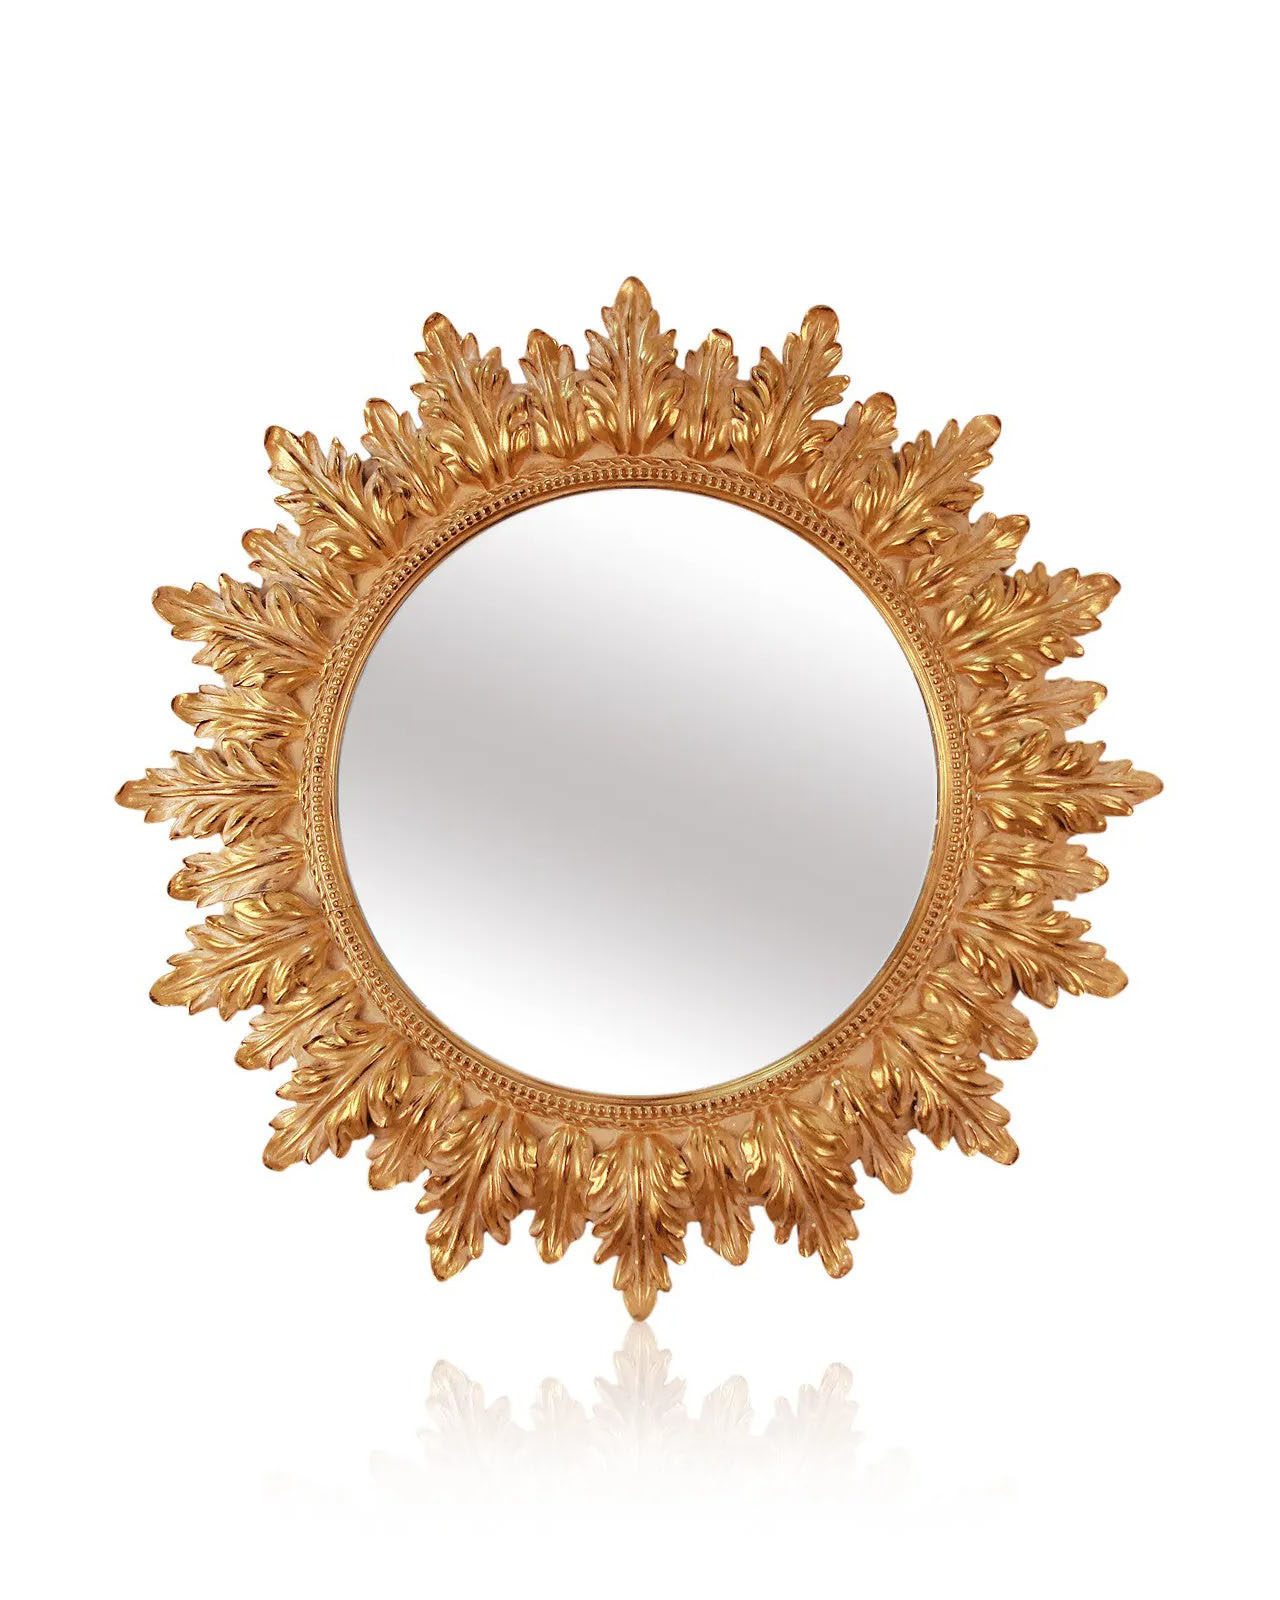 Зеркало gold. Напольное зеркало Венето Florentine Silver/19. Зеркало "Alba". Зеркало настенное круглое золотое "Гелиос Голд".